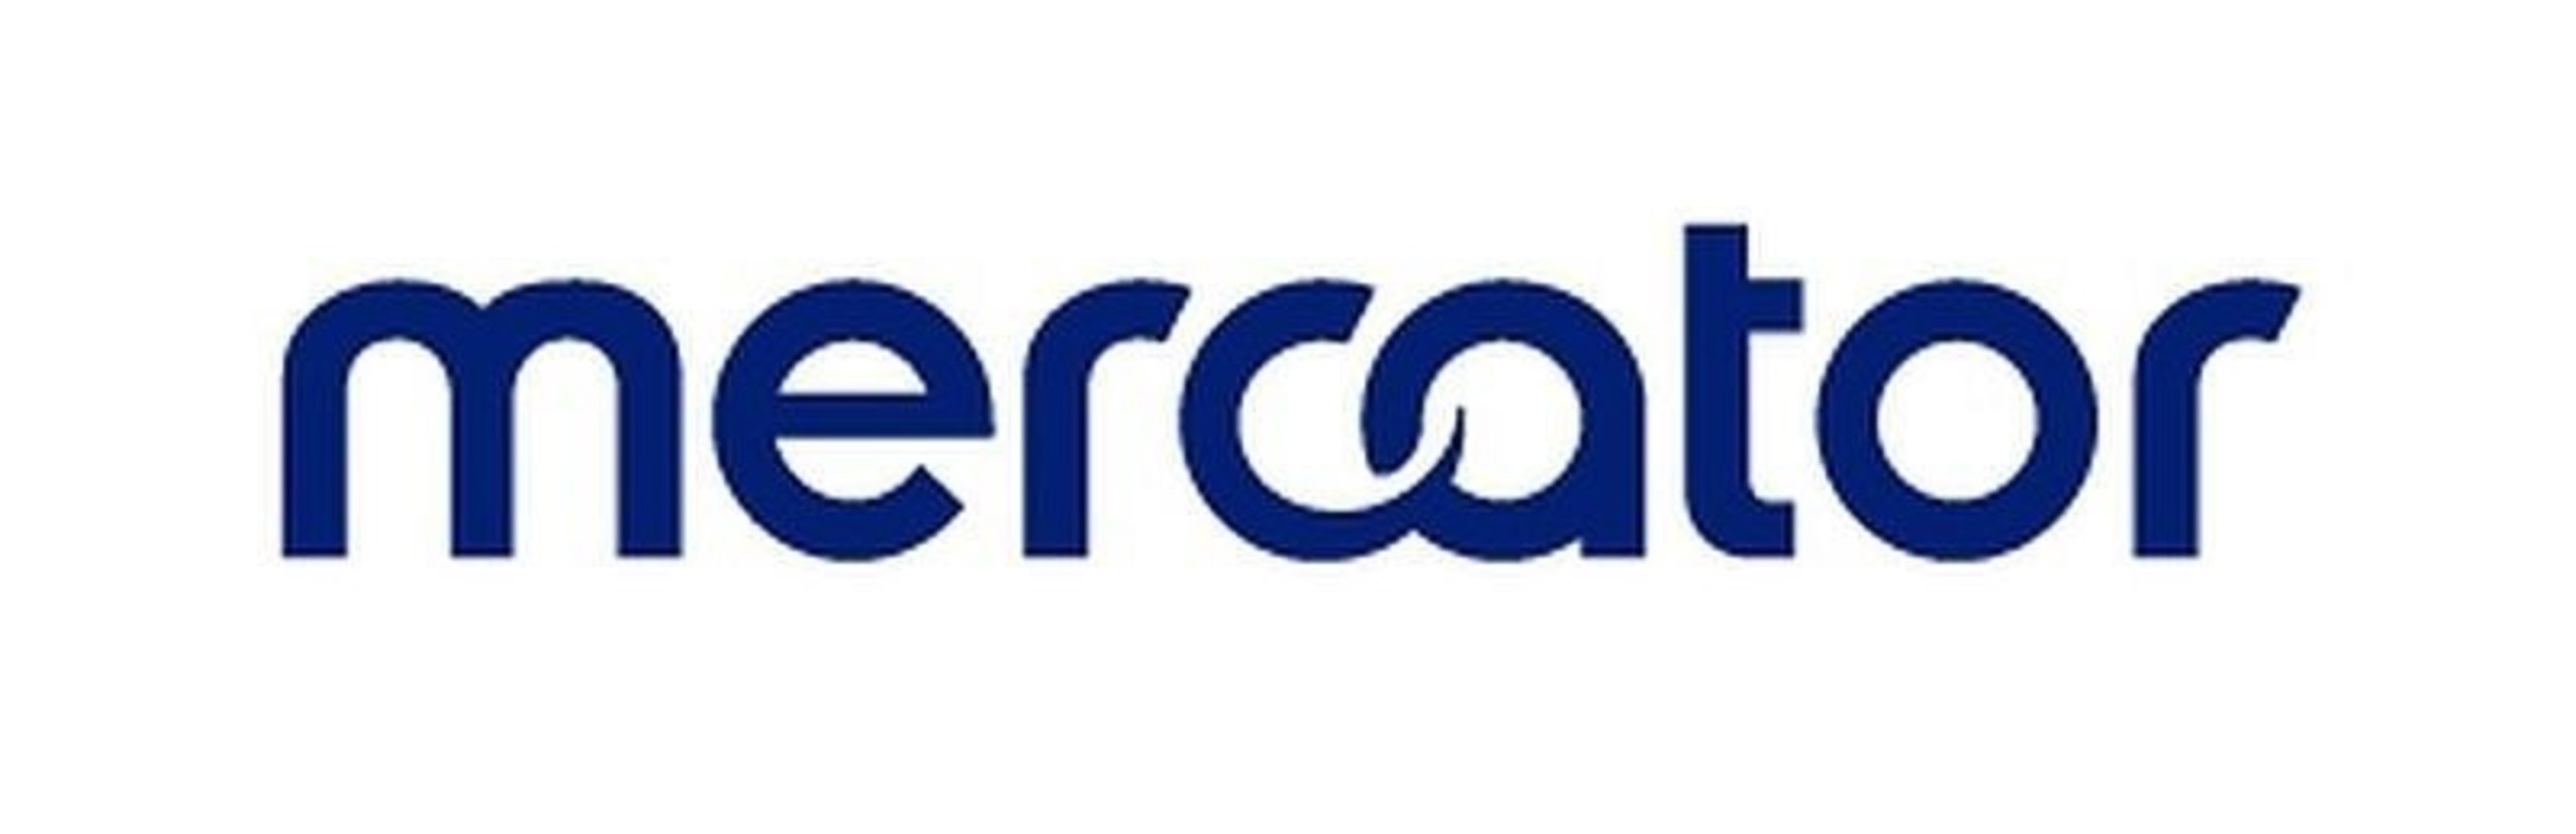 Mercator logo (PRNewsFoto/Mercator) (PRNewsFoto/Mercator)